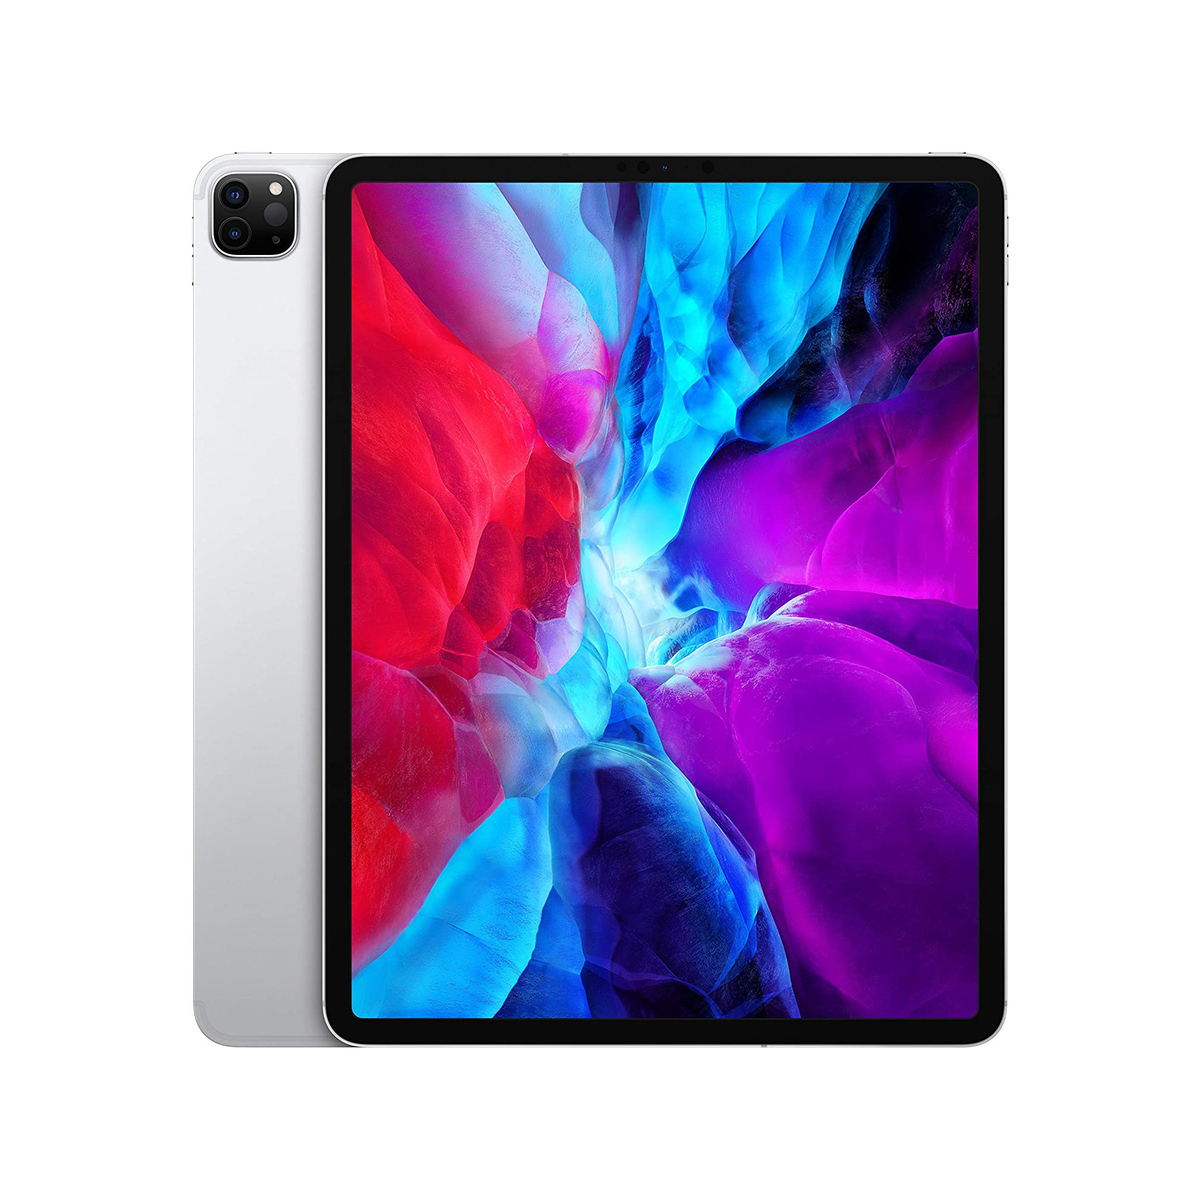 Apple iPad Pro (12.9-inch, Wi-Fi + Cellular, 256GB) - Silver (4th Generation)